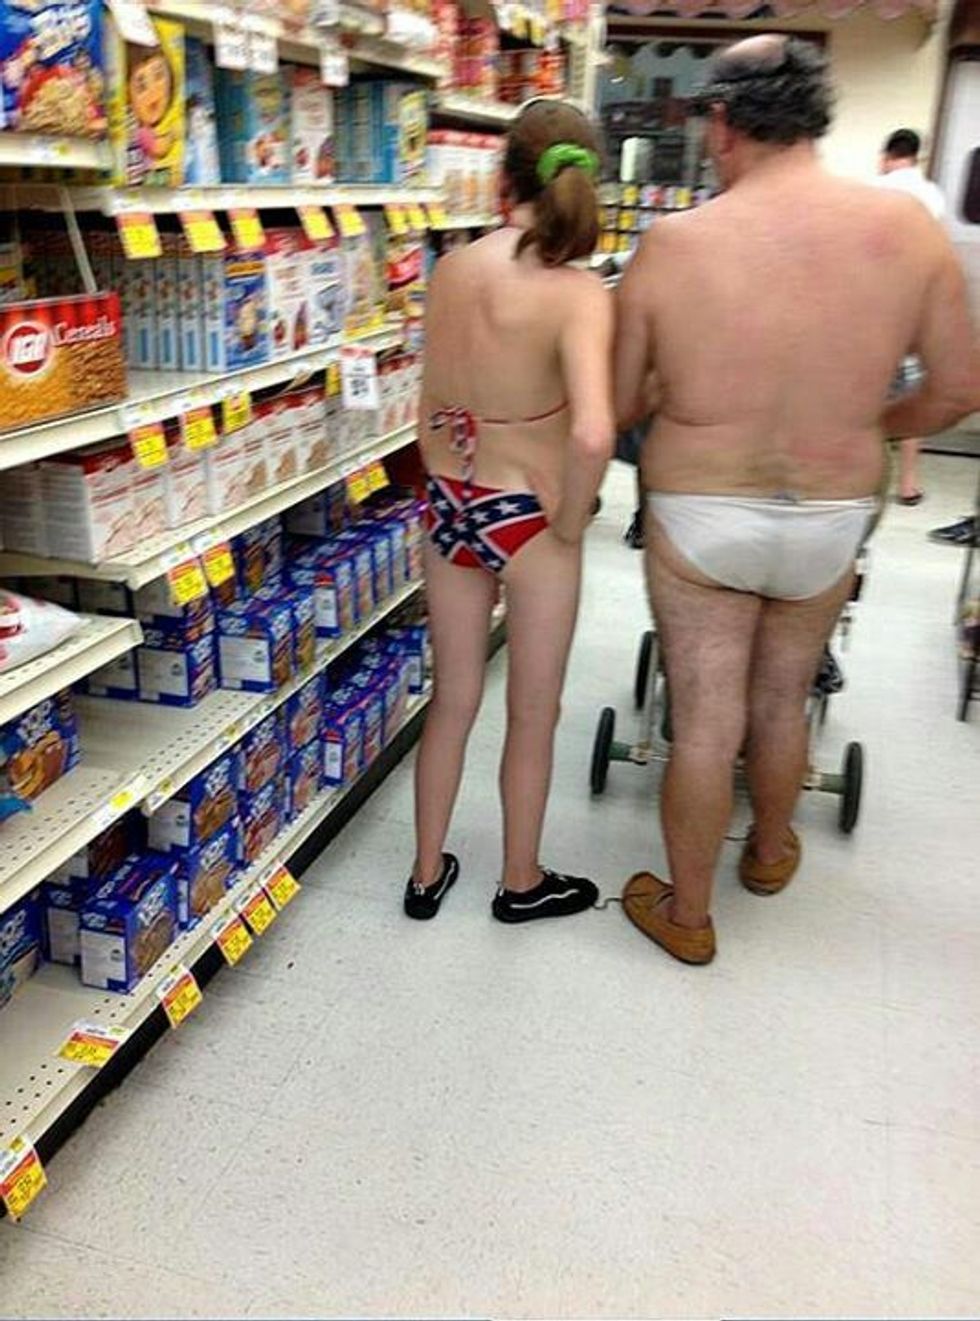 Walmart Wonders Where It Got All This Confederate Flag Merch